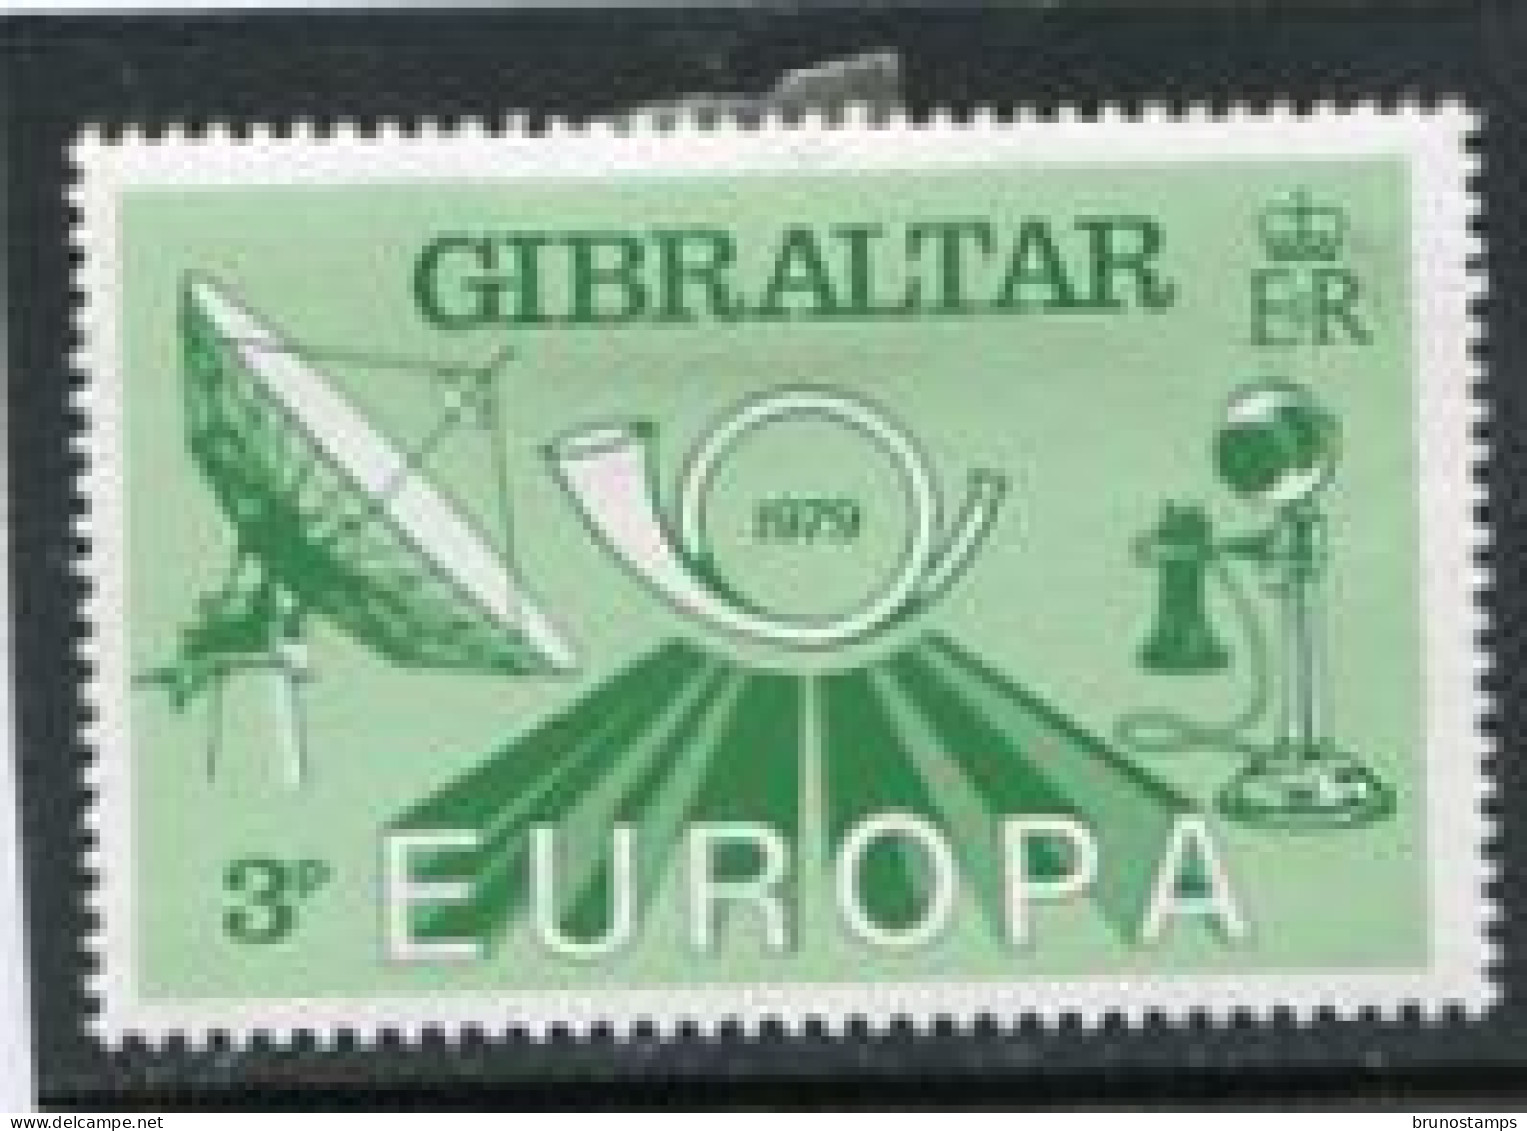 GIBRALTAR - 1979  3p  EUROPA  MINT - Gibilterra